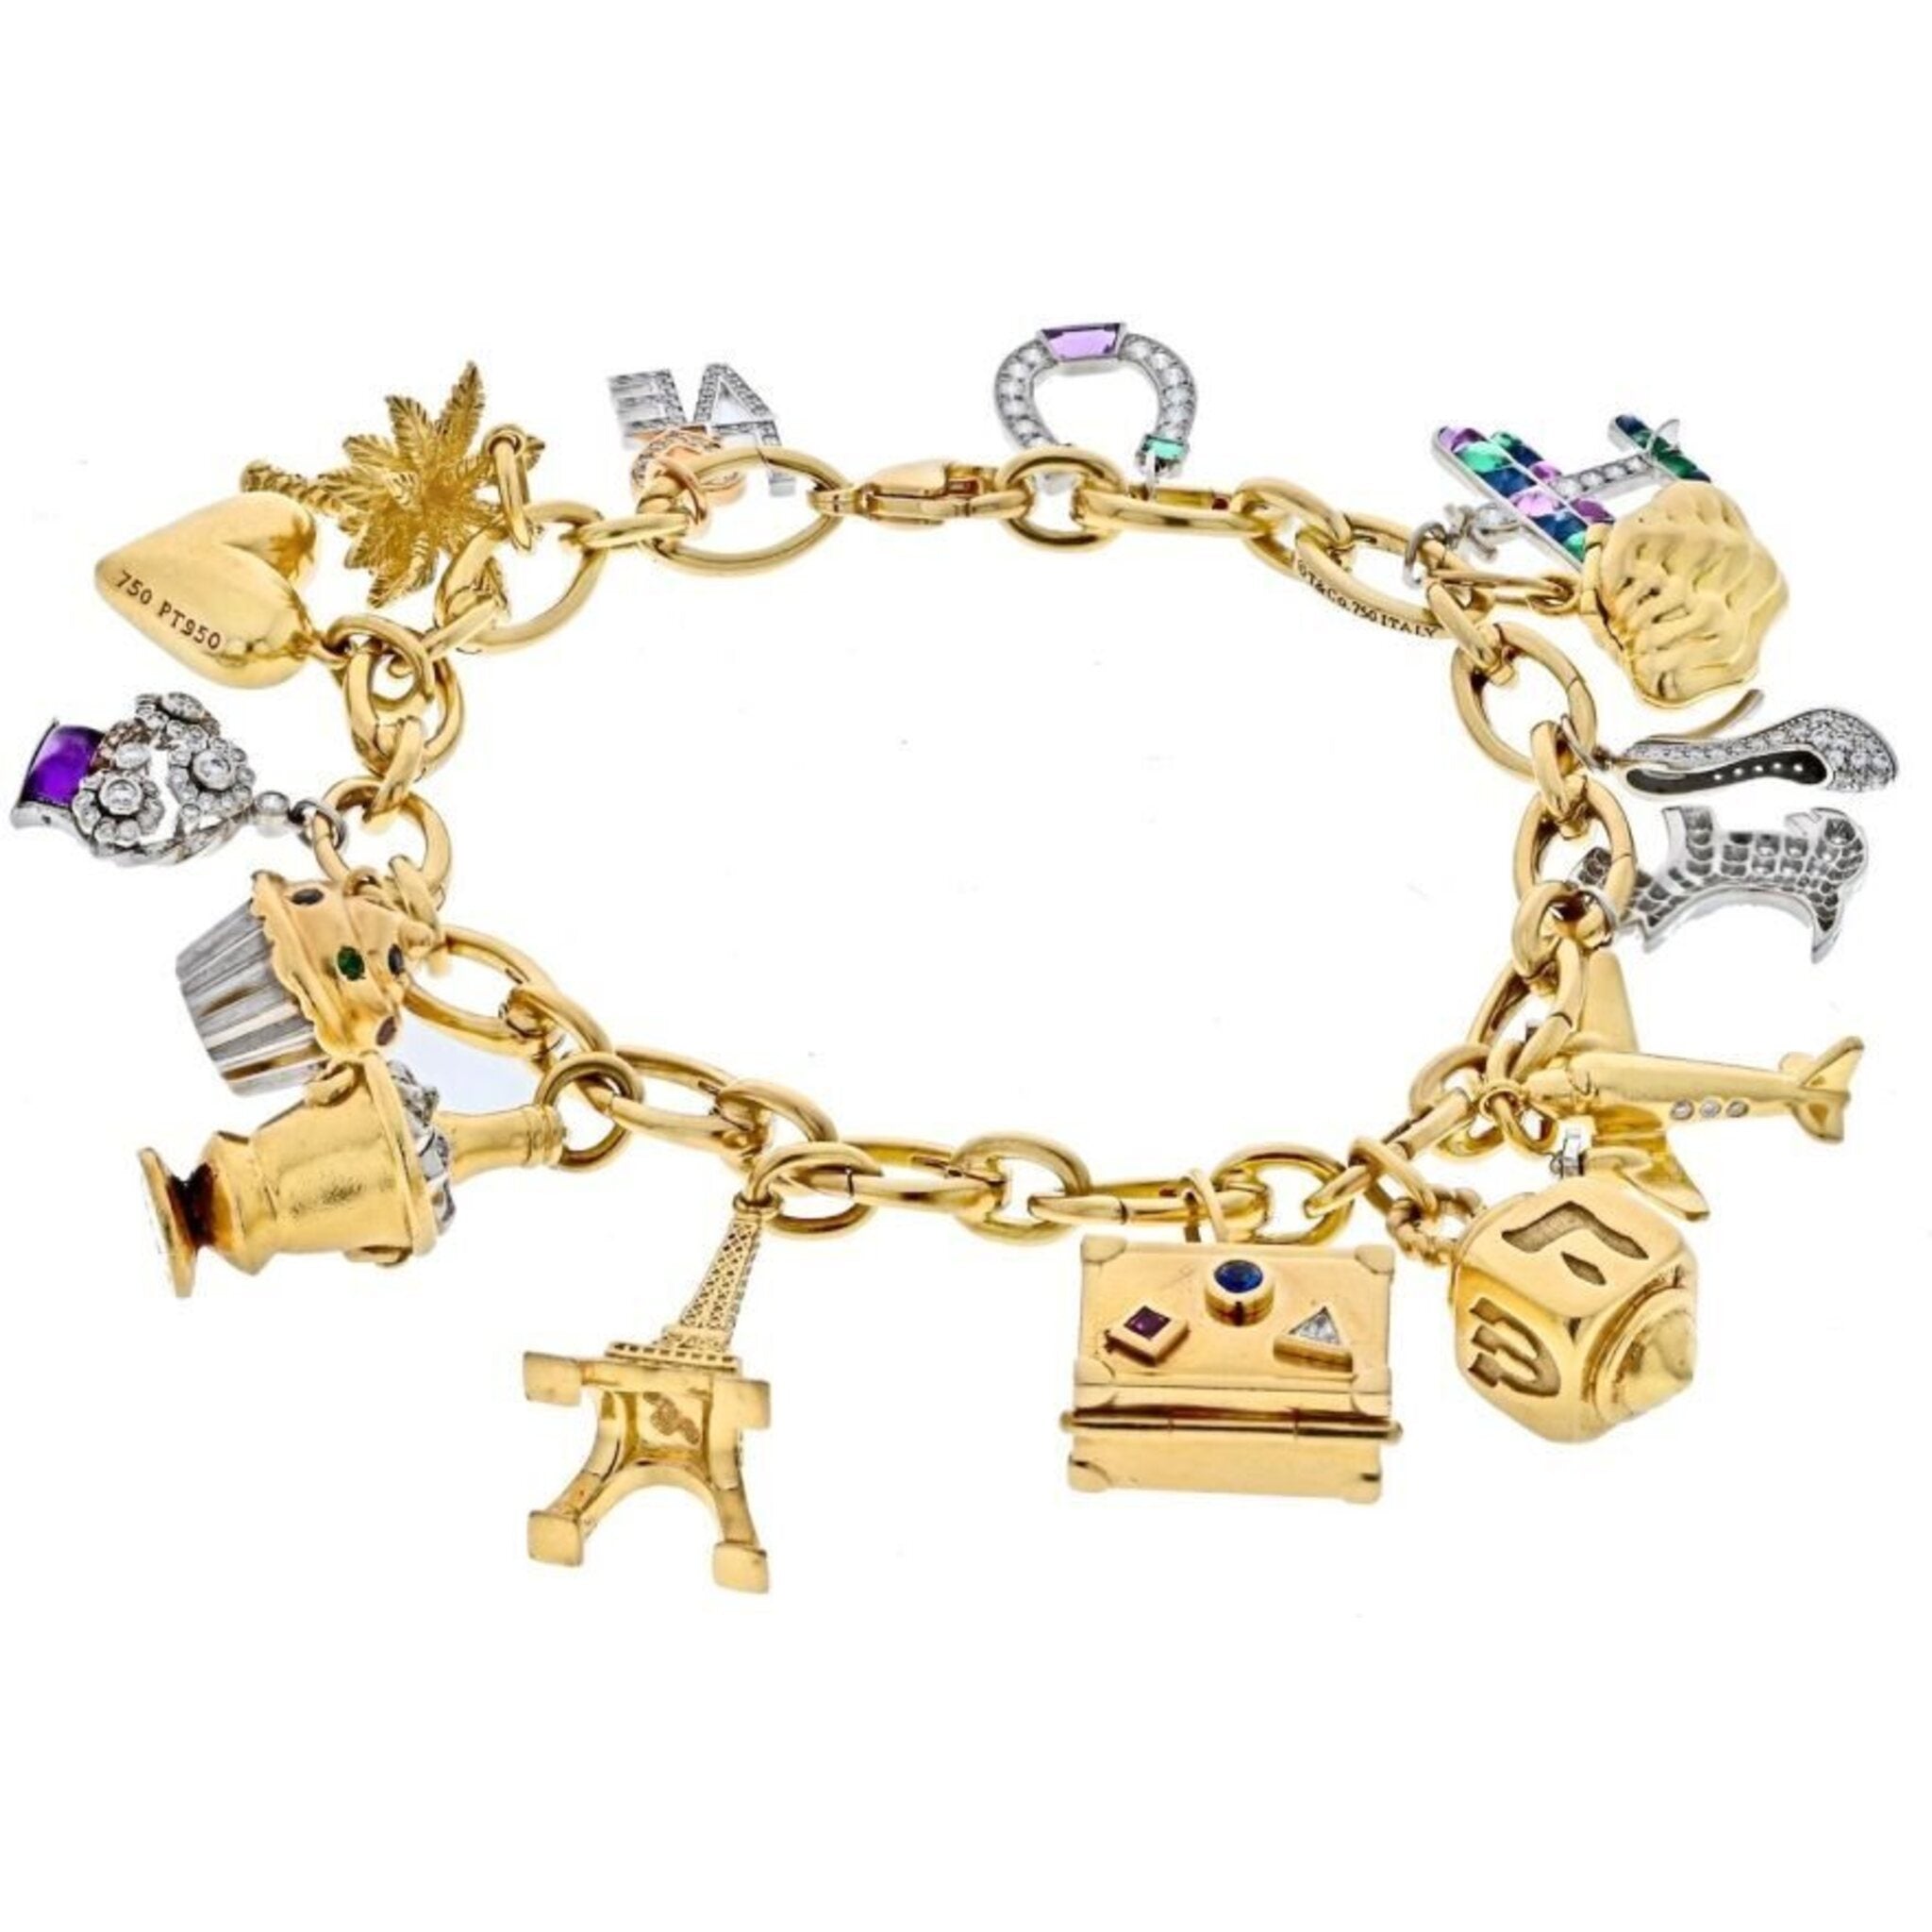 charm bracelet gold